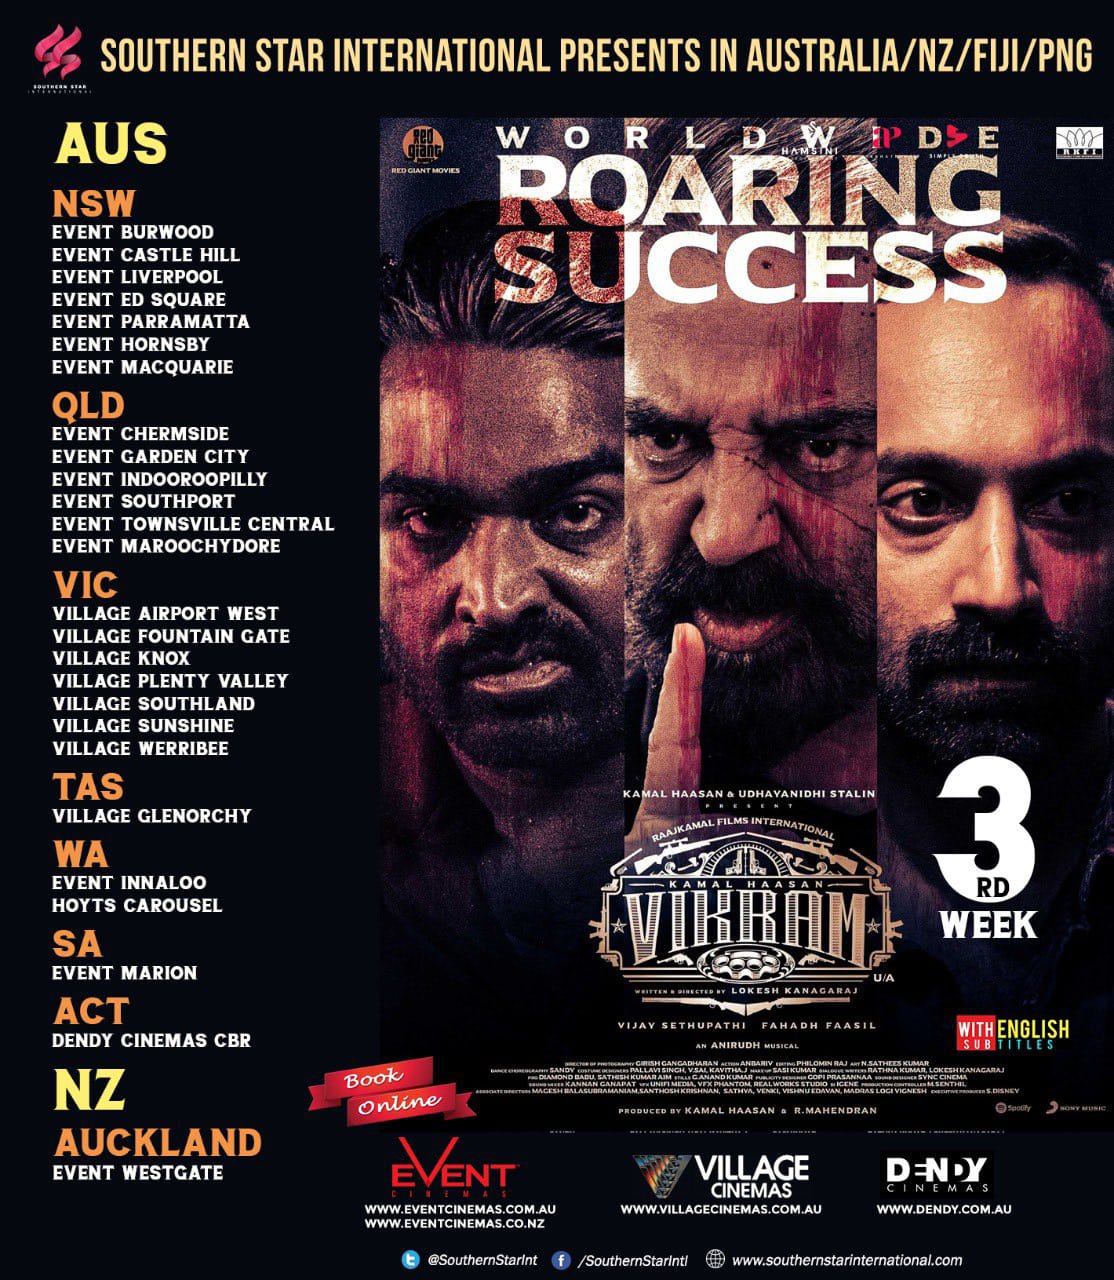 Kamal Haasan Vikram Movie Australia Box Office Collection 1 Million USD